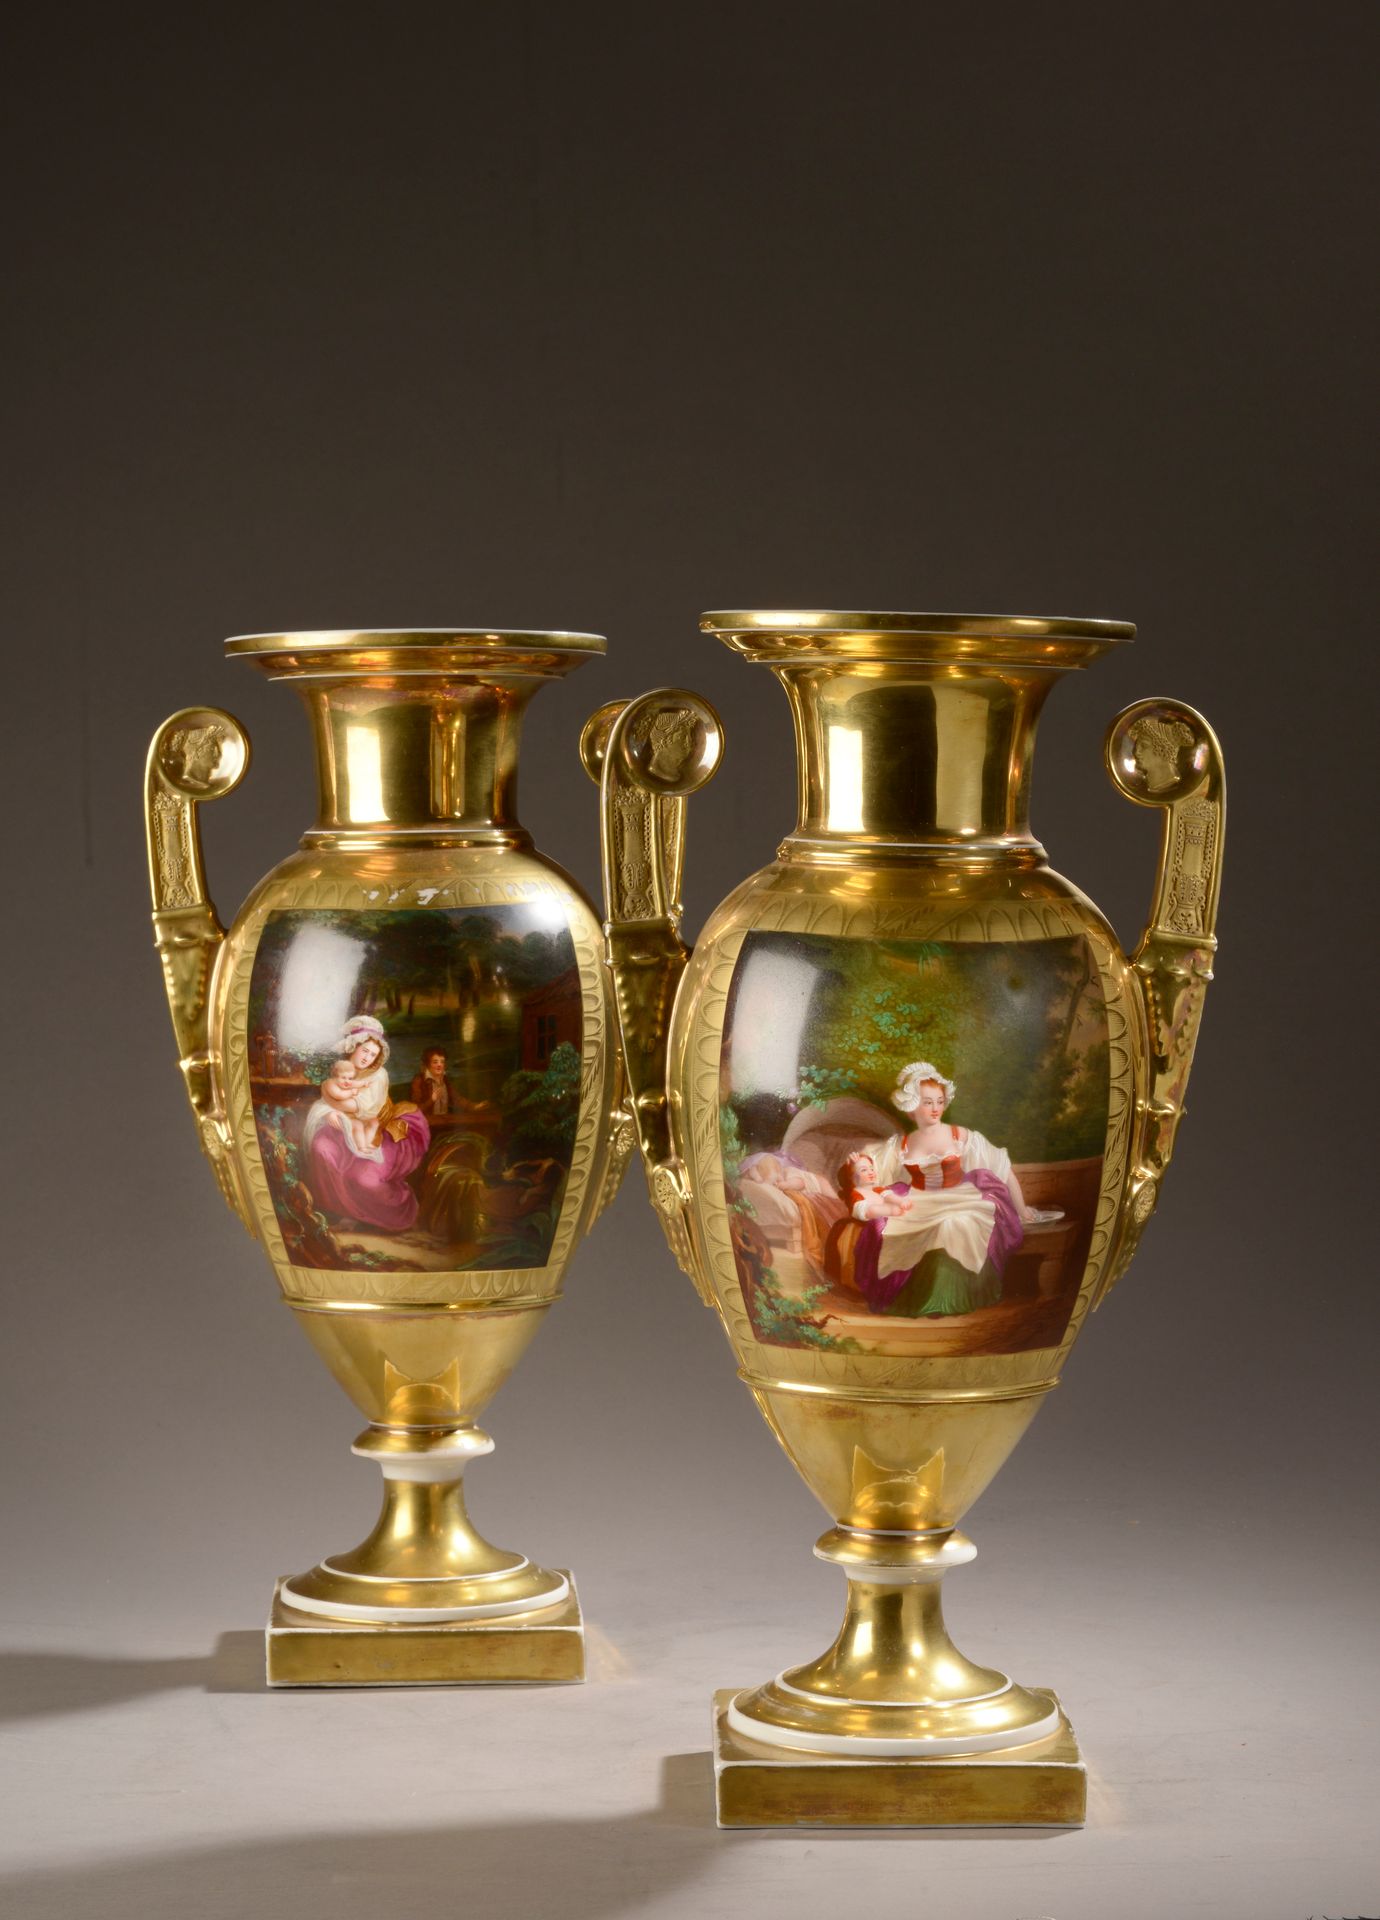 Null 巴黎。
一对瓷质的基座花瓶，有多色的母性场景的装饰，把手有仿古风格的轮廓装饰，背景是哑光和亮金色（磨损）。 
帝国时期。
高度：41厘米